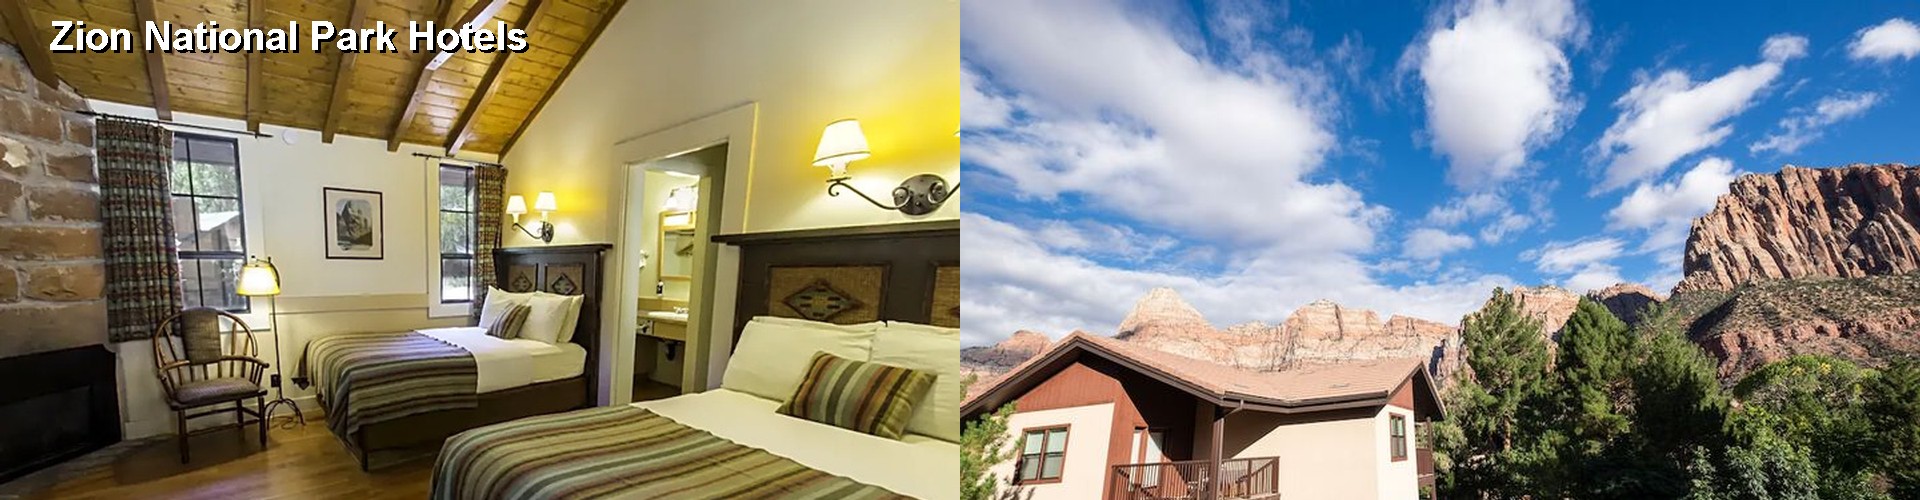 5 Best Hotels near Zion National Park